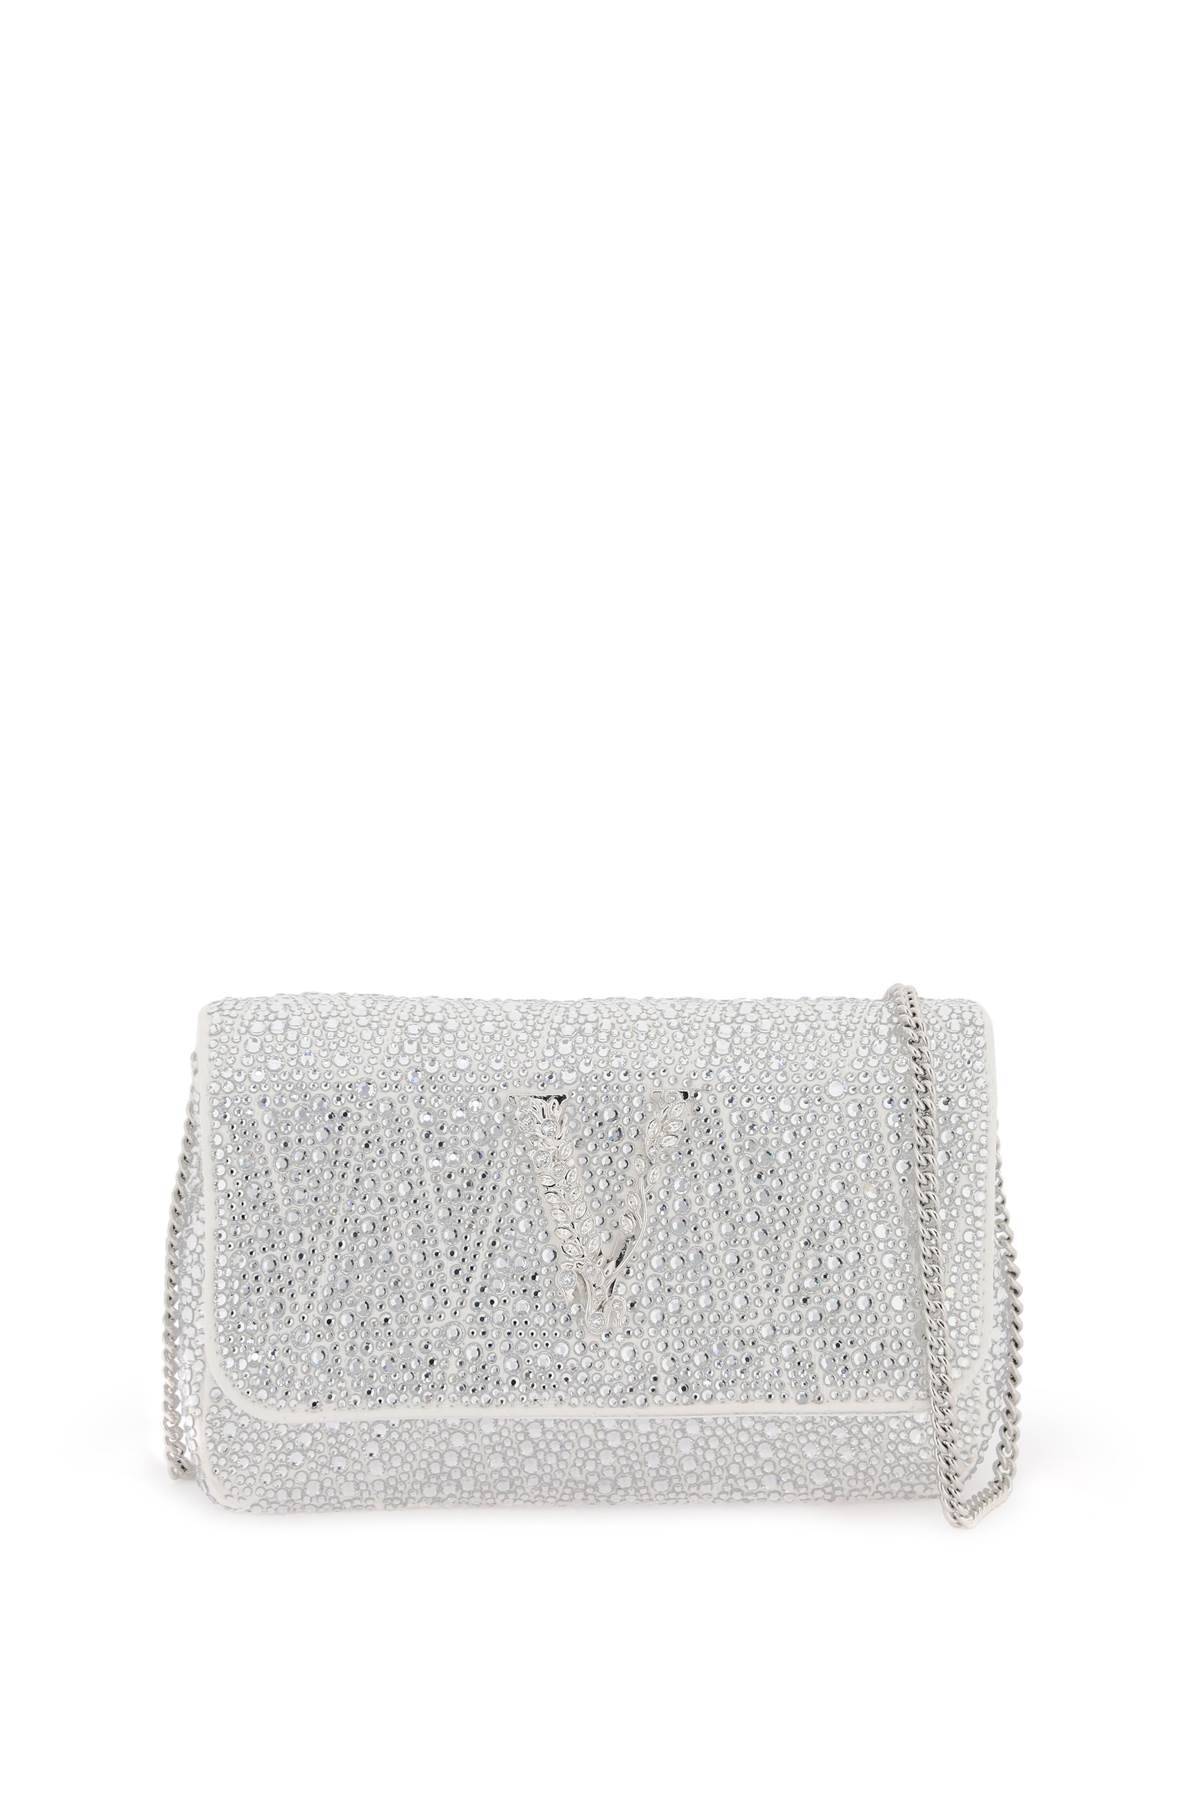 Versace VERSACE virtus mini bag with crystals